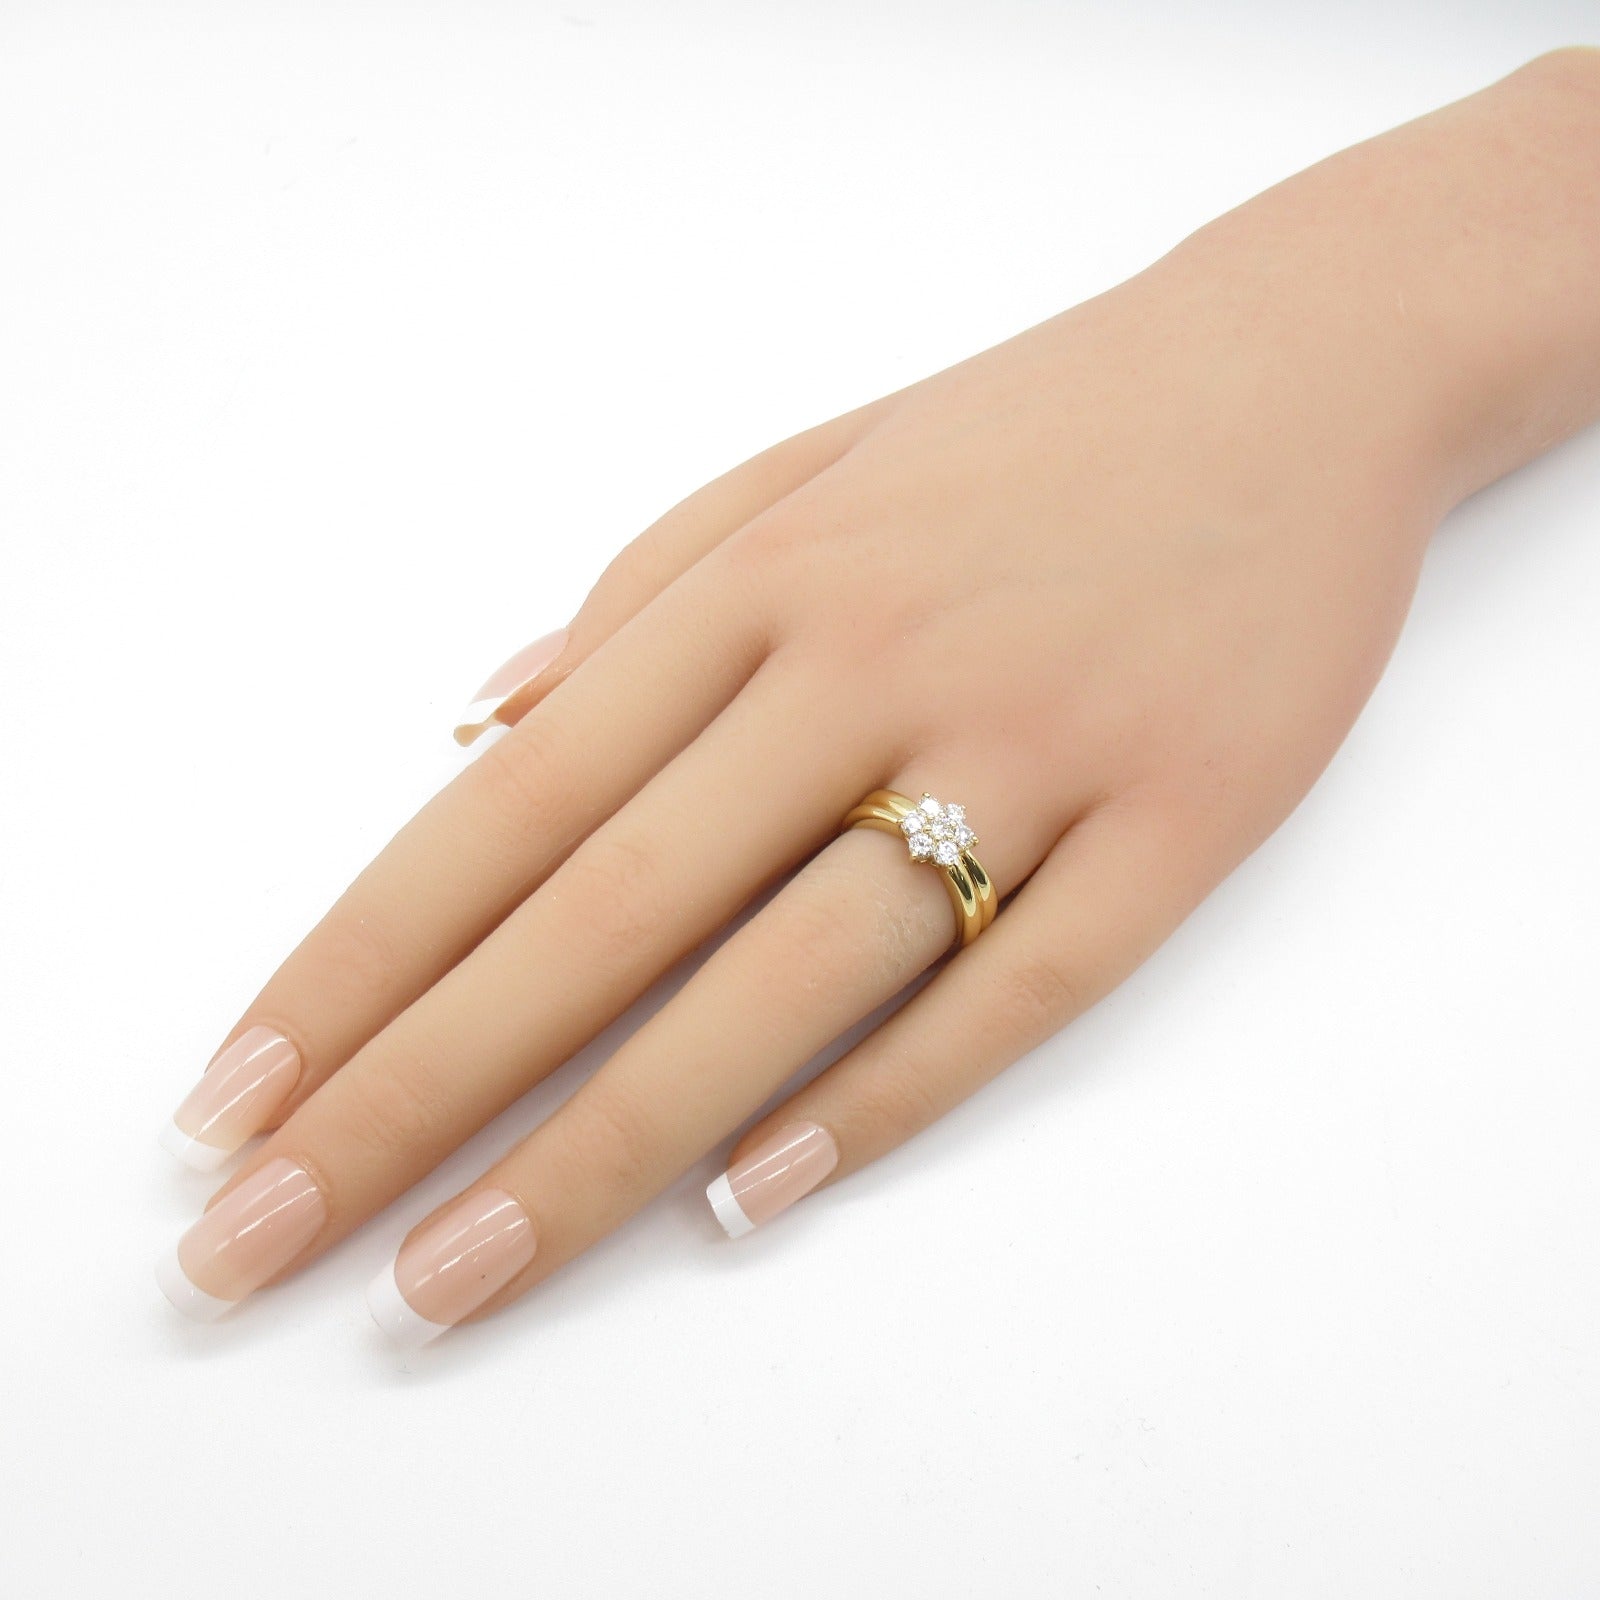 Jewelry Jewelry Diamond Ring Ring Ring Jewelry K18 (yellow g) Diamond  Clear Diamond 4.9g